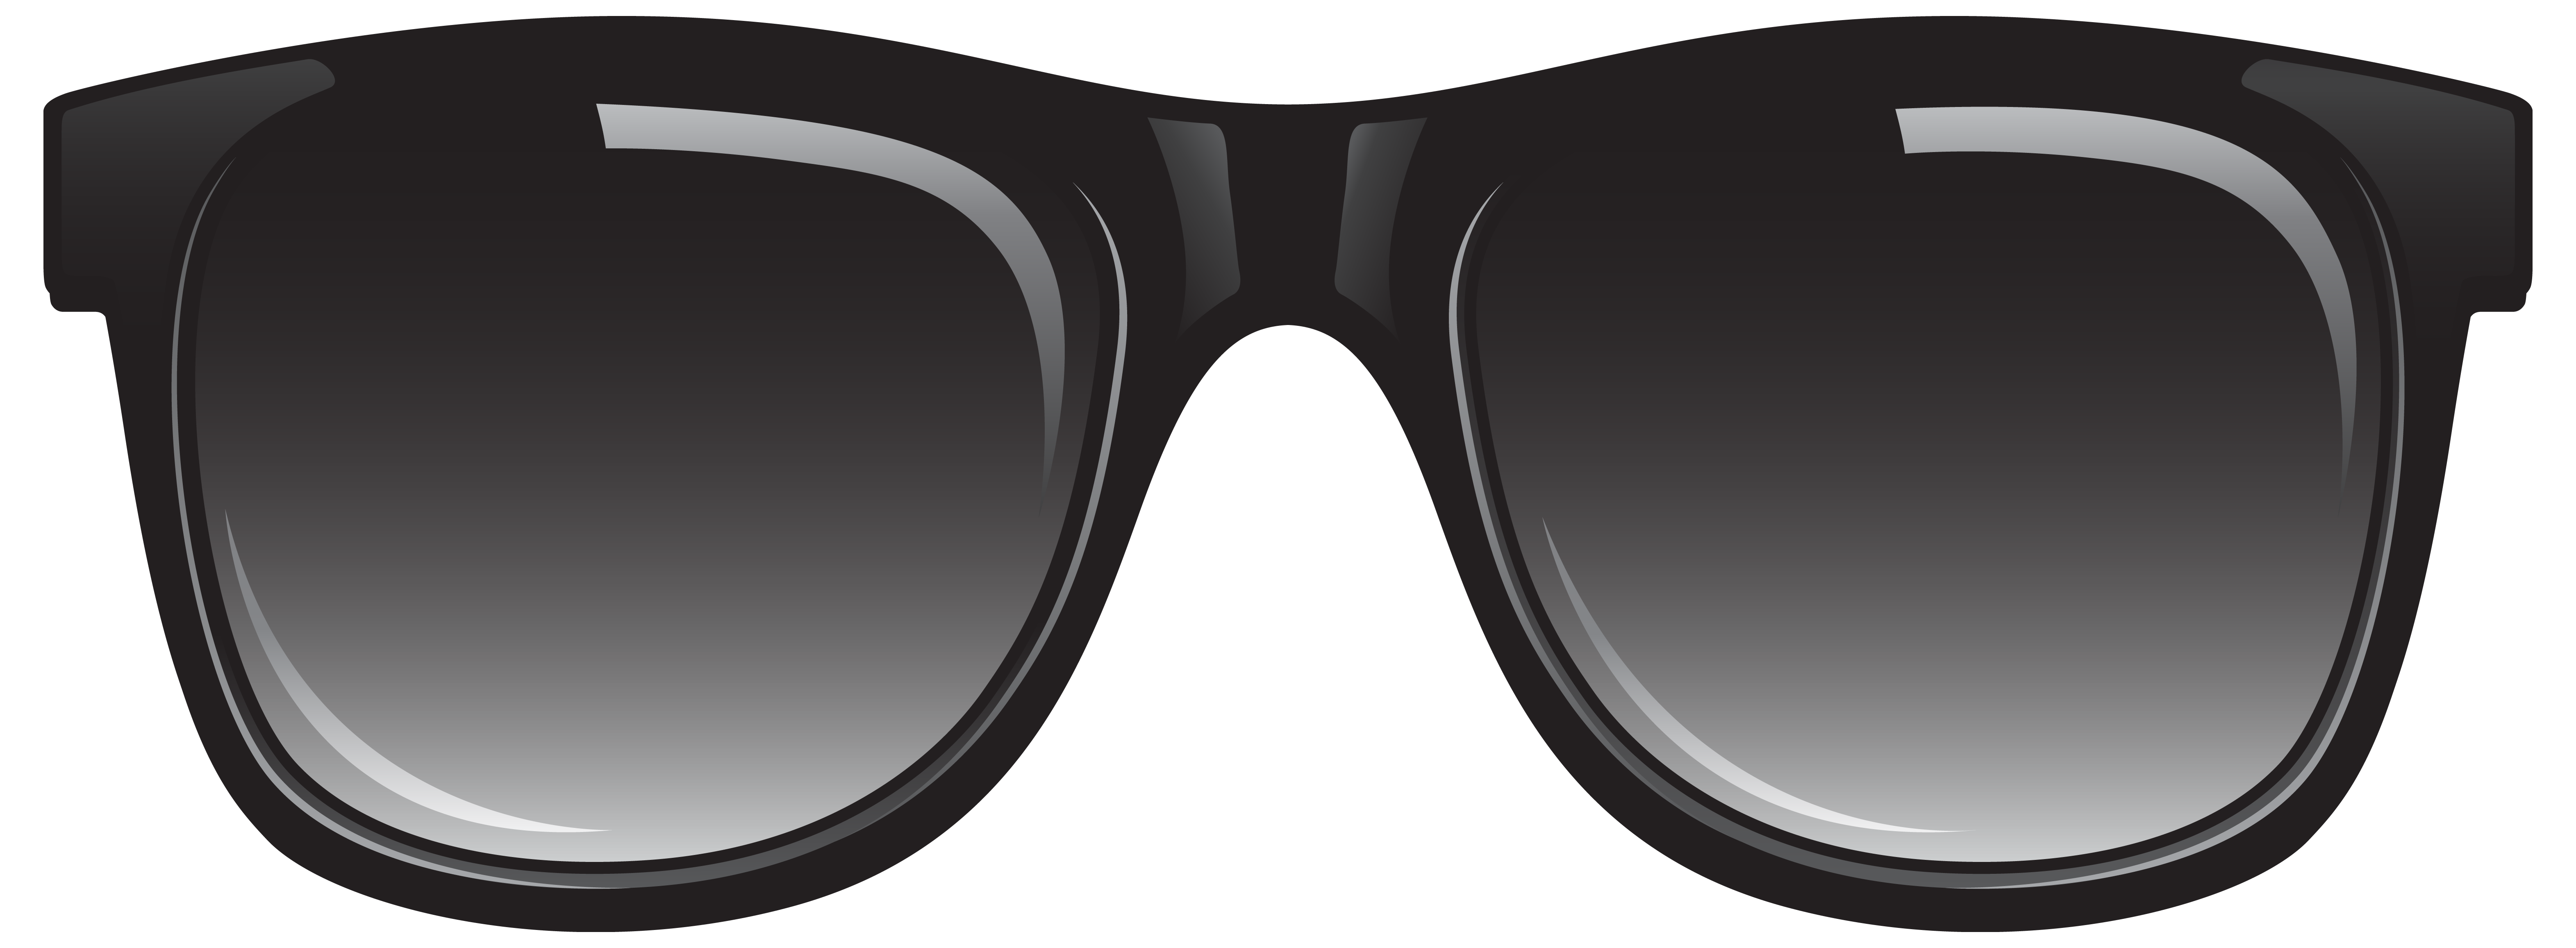 Free Sunglasses Clipart Transparent, Download Free Sunglasses Clipart ...